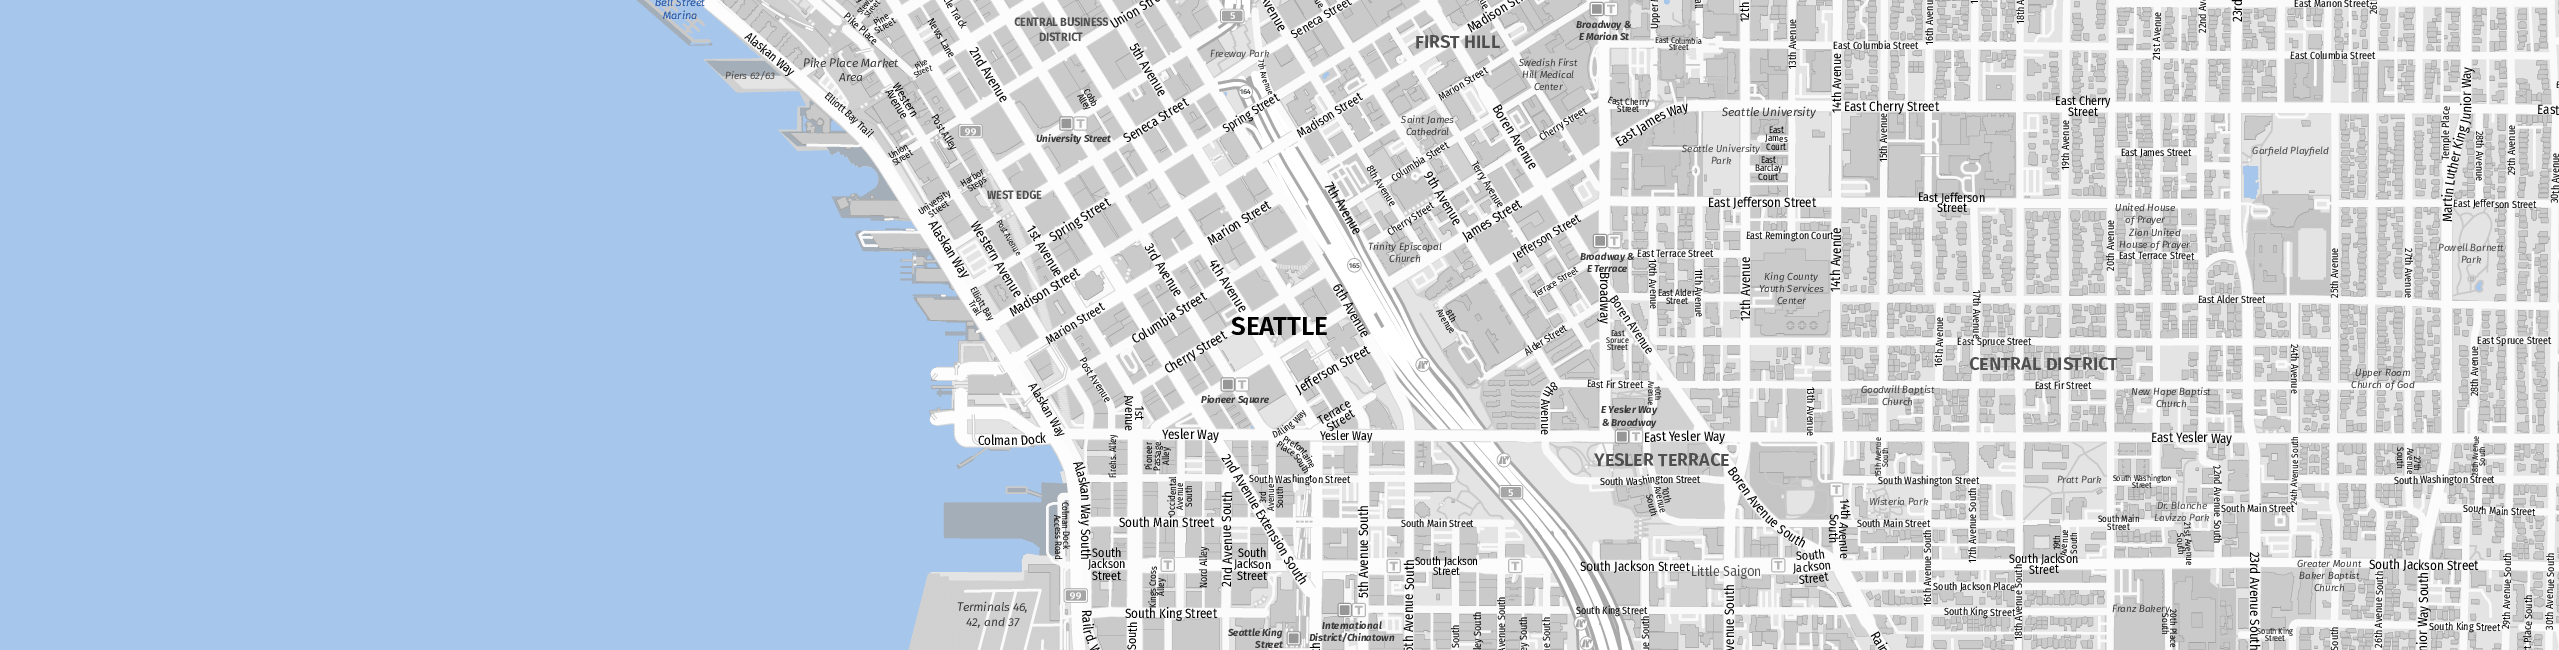 Stadtplan Seattle zum Downloaden.